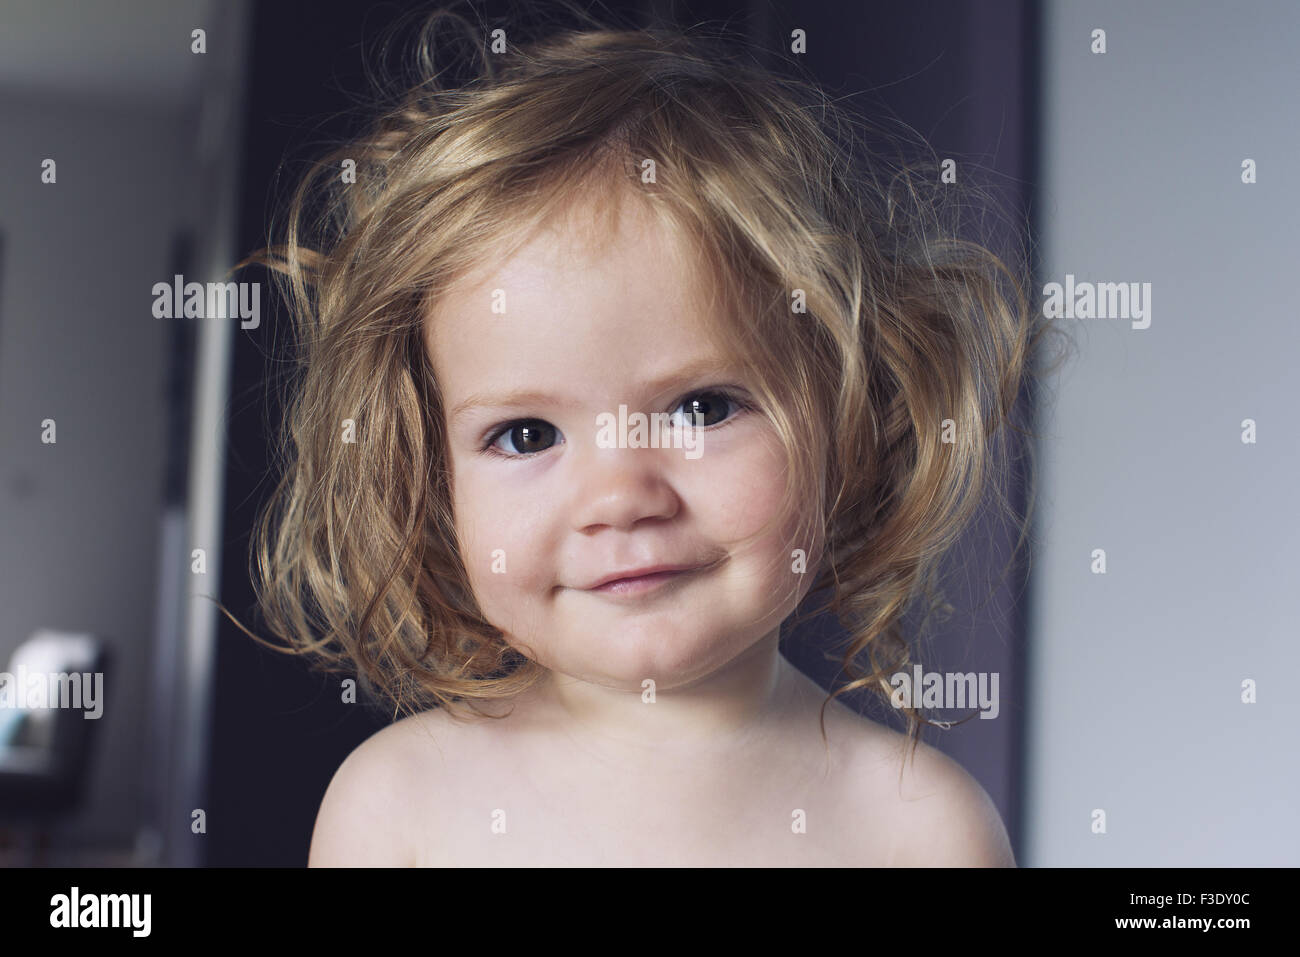 Baby girl smiling, portrait Stock Photo